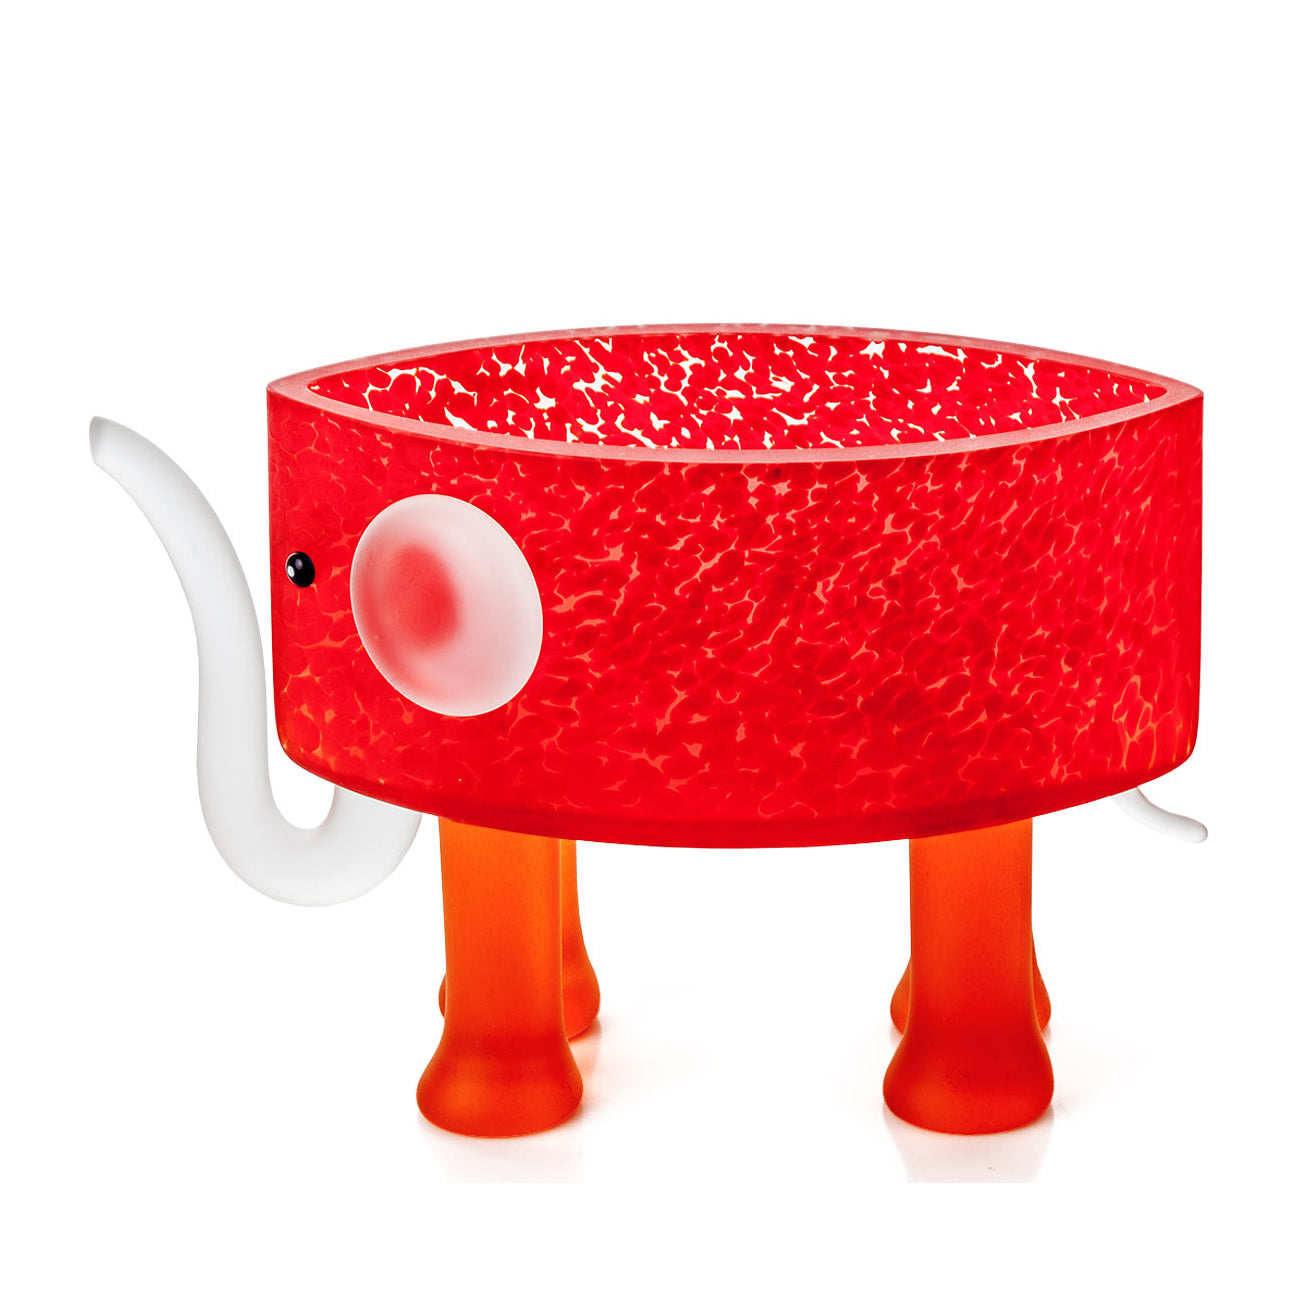 Ben the Elephant Bowl, Red- by Borowski